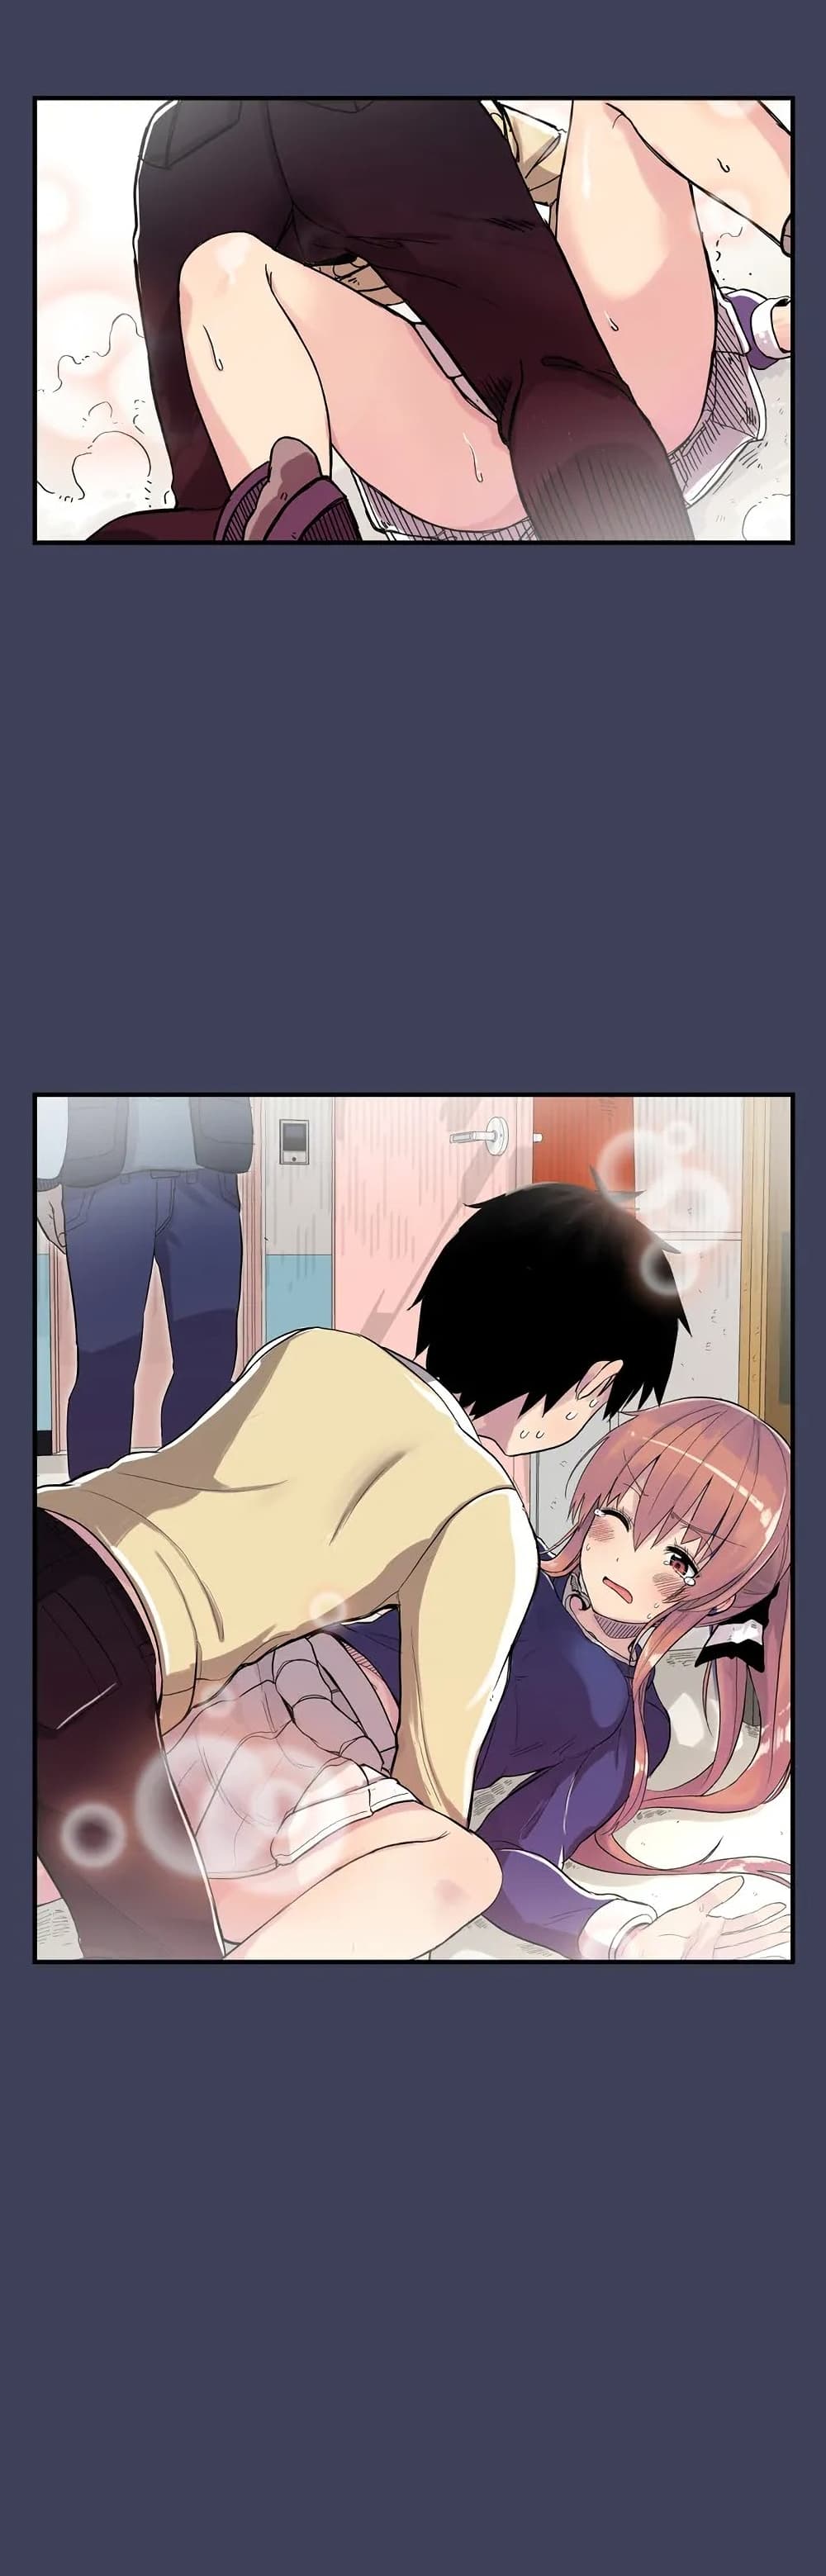 Erotic Manga Club ตอนที่ 6 (16)